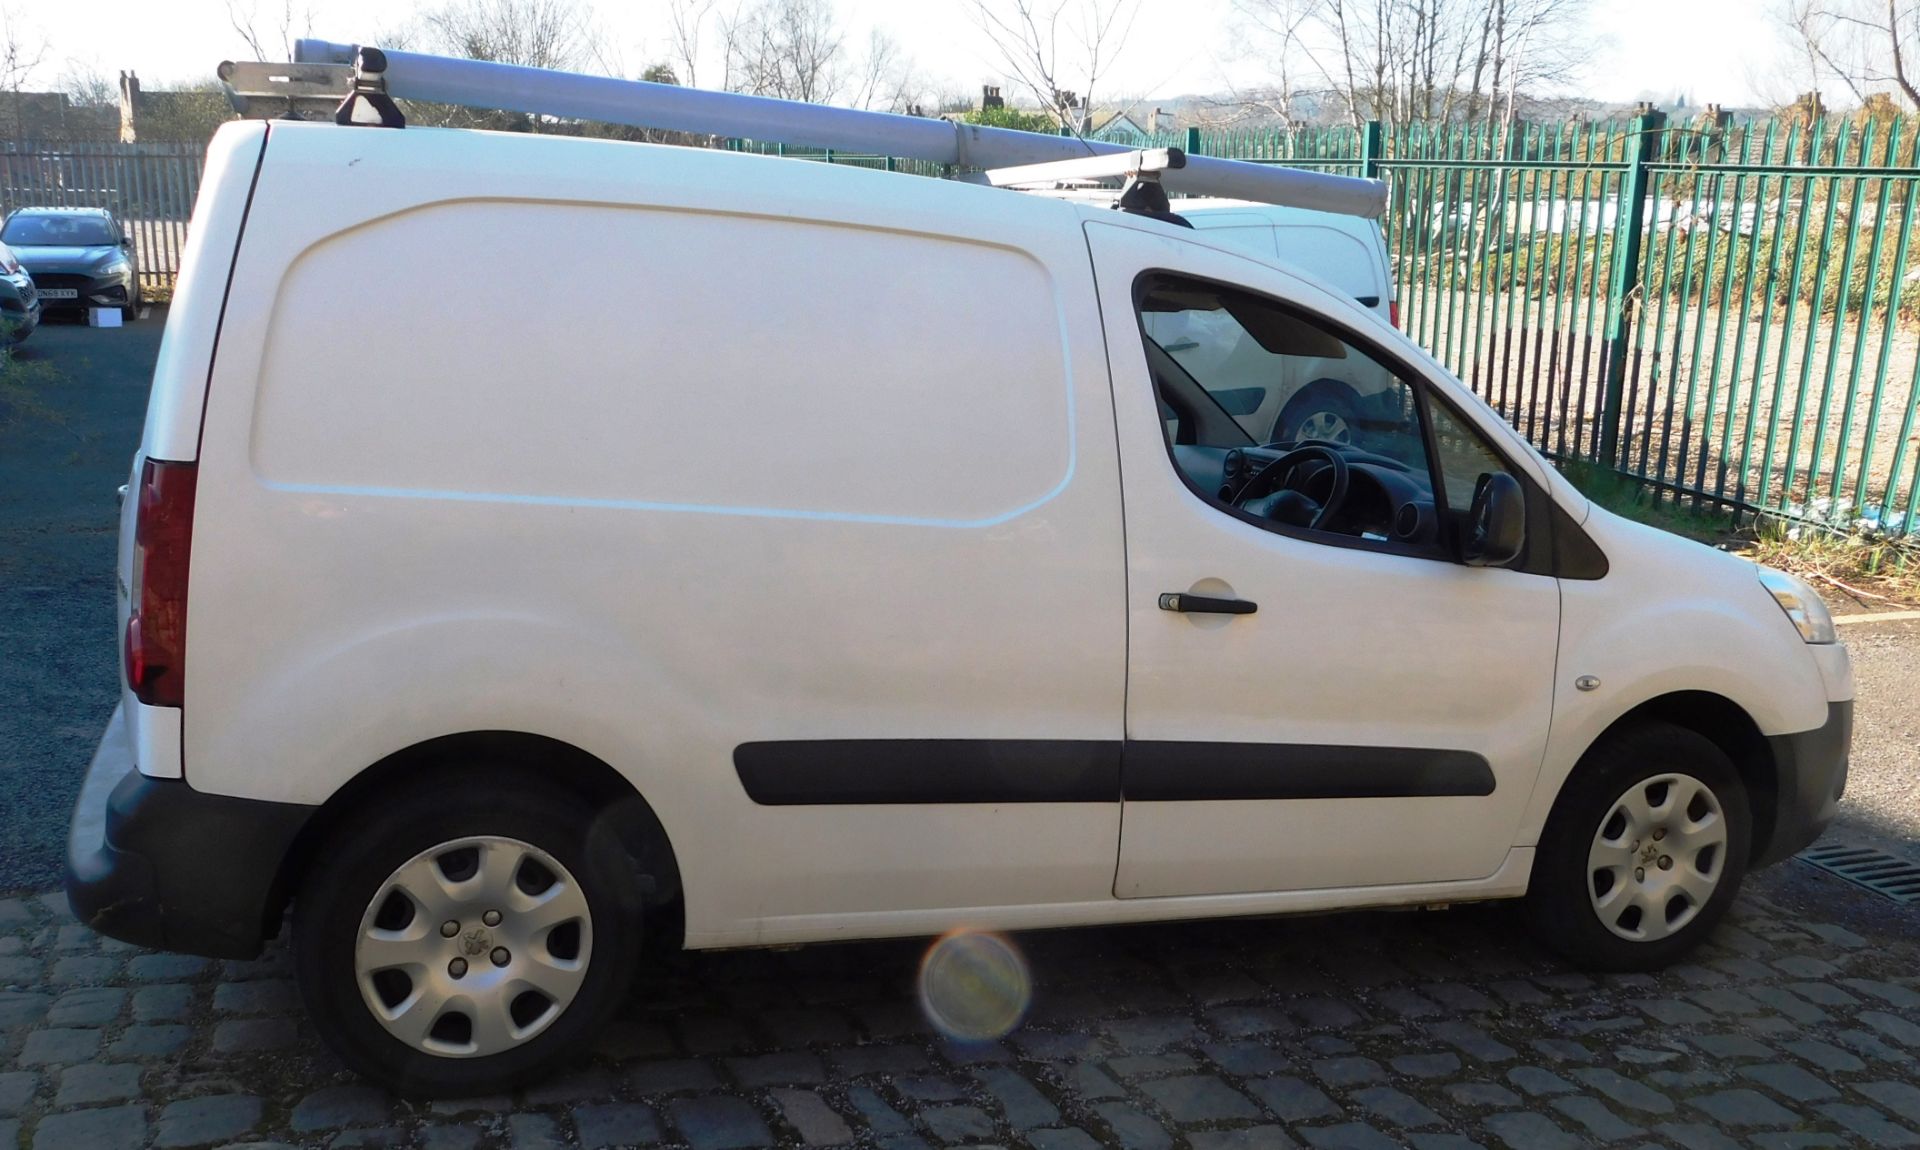 Peugeot Partner 625 1.6 HDi 75 panel van, registration BF64 VZH, first registered 30 September 2014, - Image 6 of 13